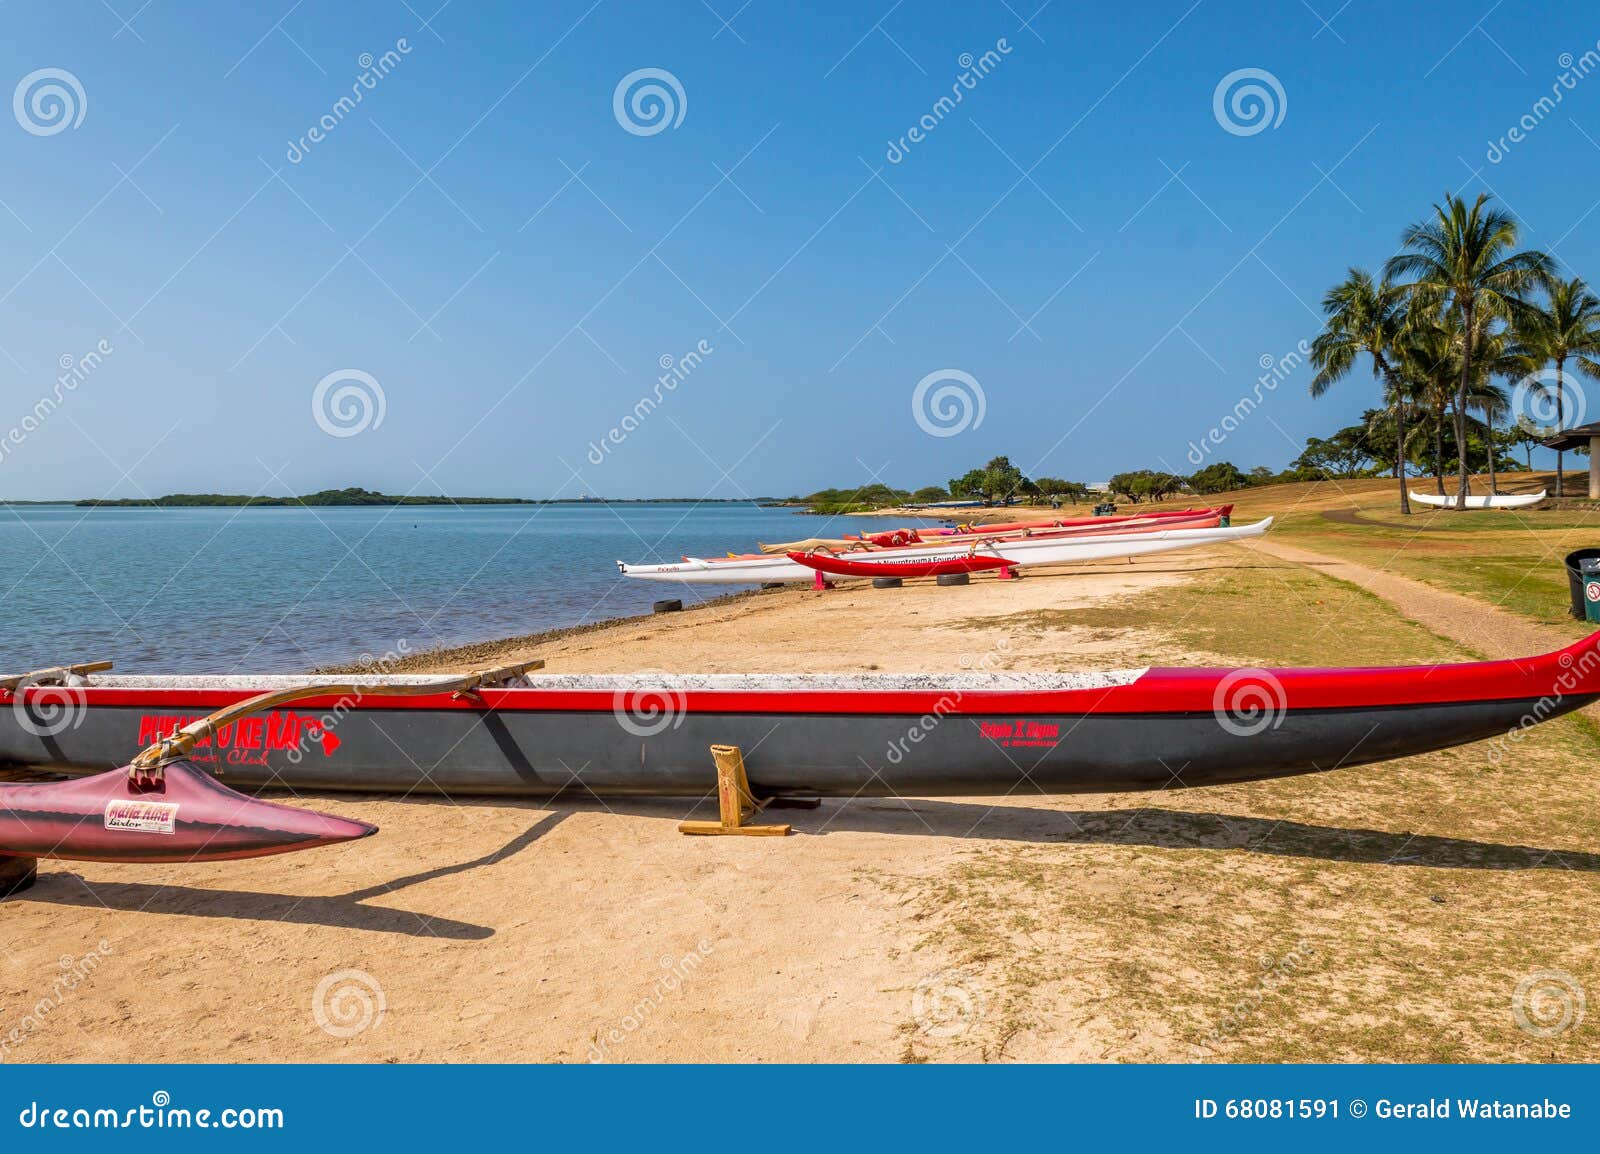 Outrigger Canoe Editorial Photo - Image: 68081591